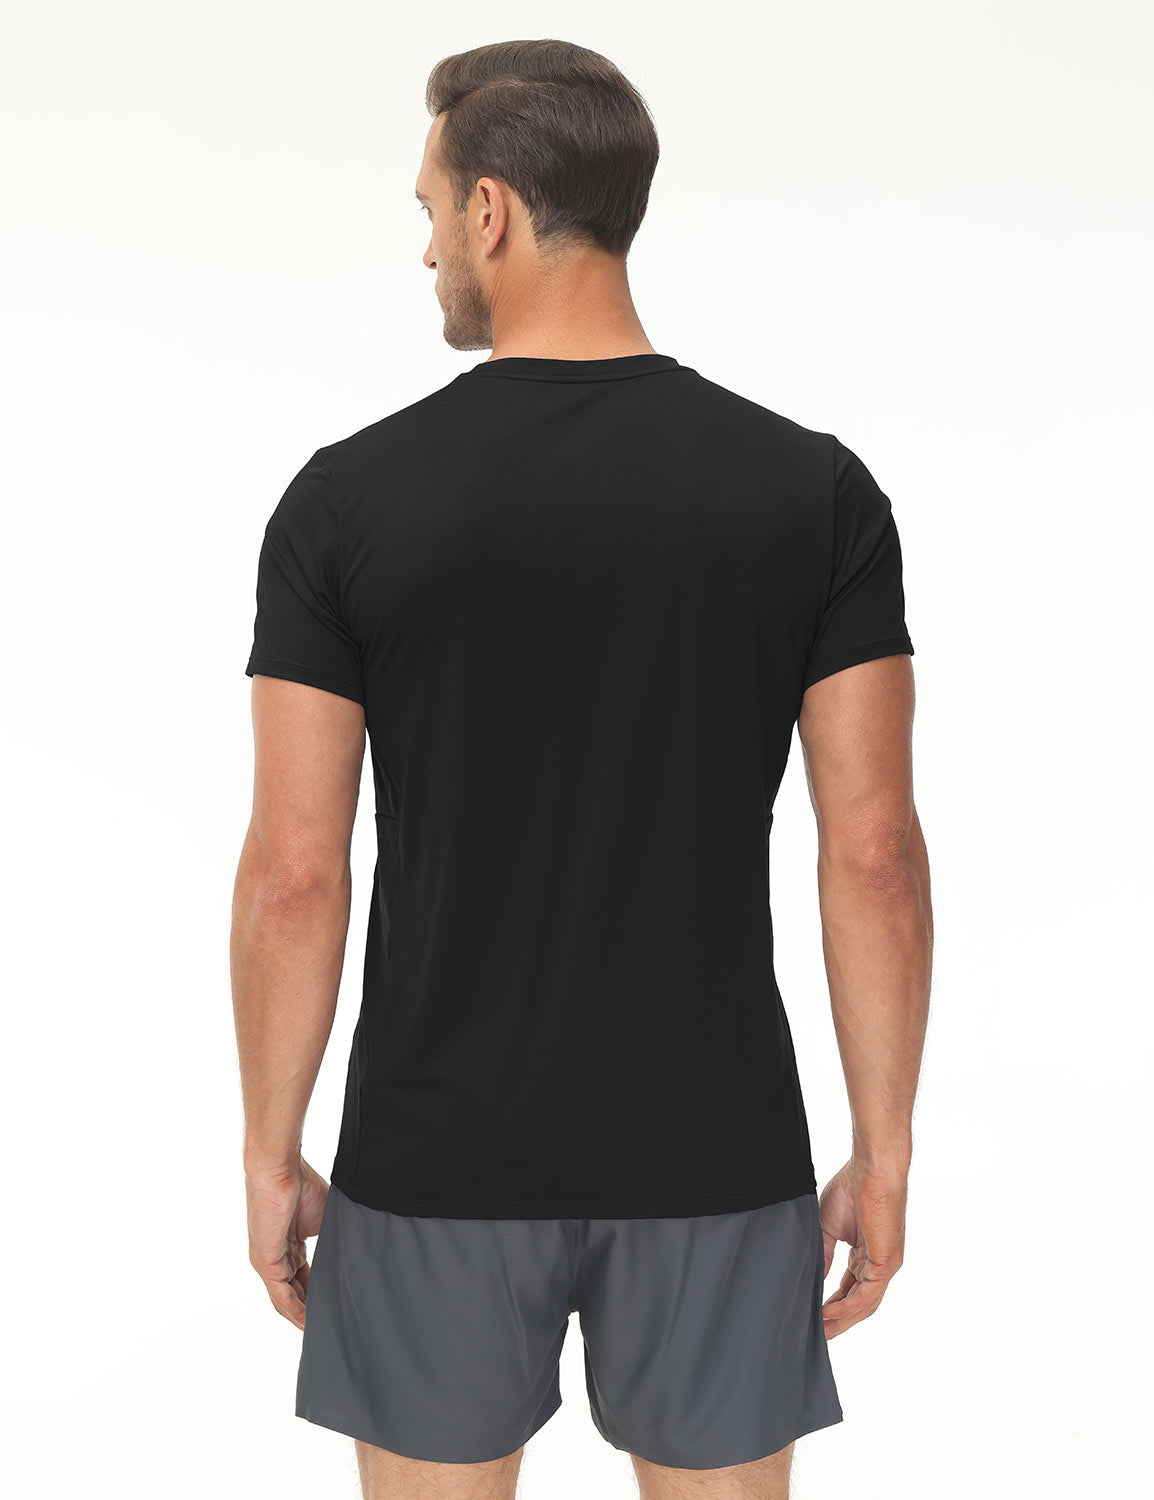 Baleaf Men's Fitted Crew Neck Short Sleeve T-shirts Anthracite Back